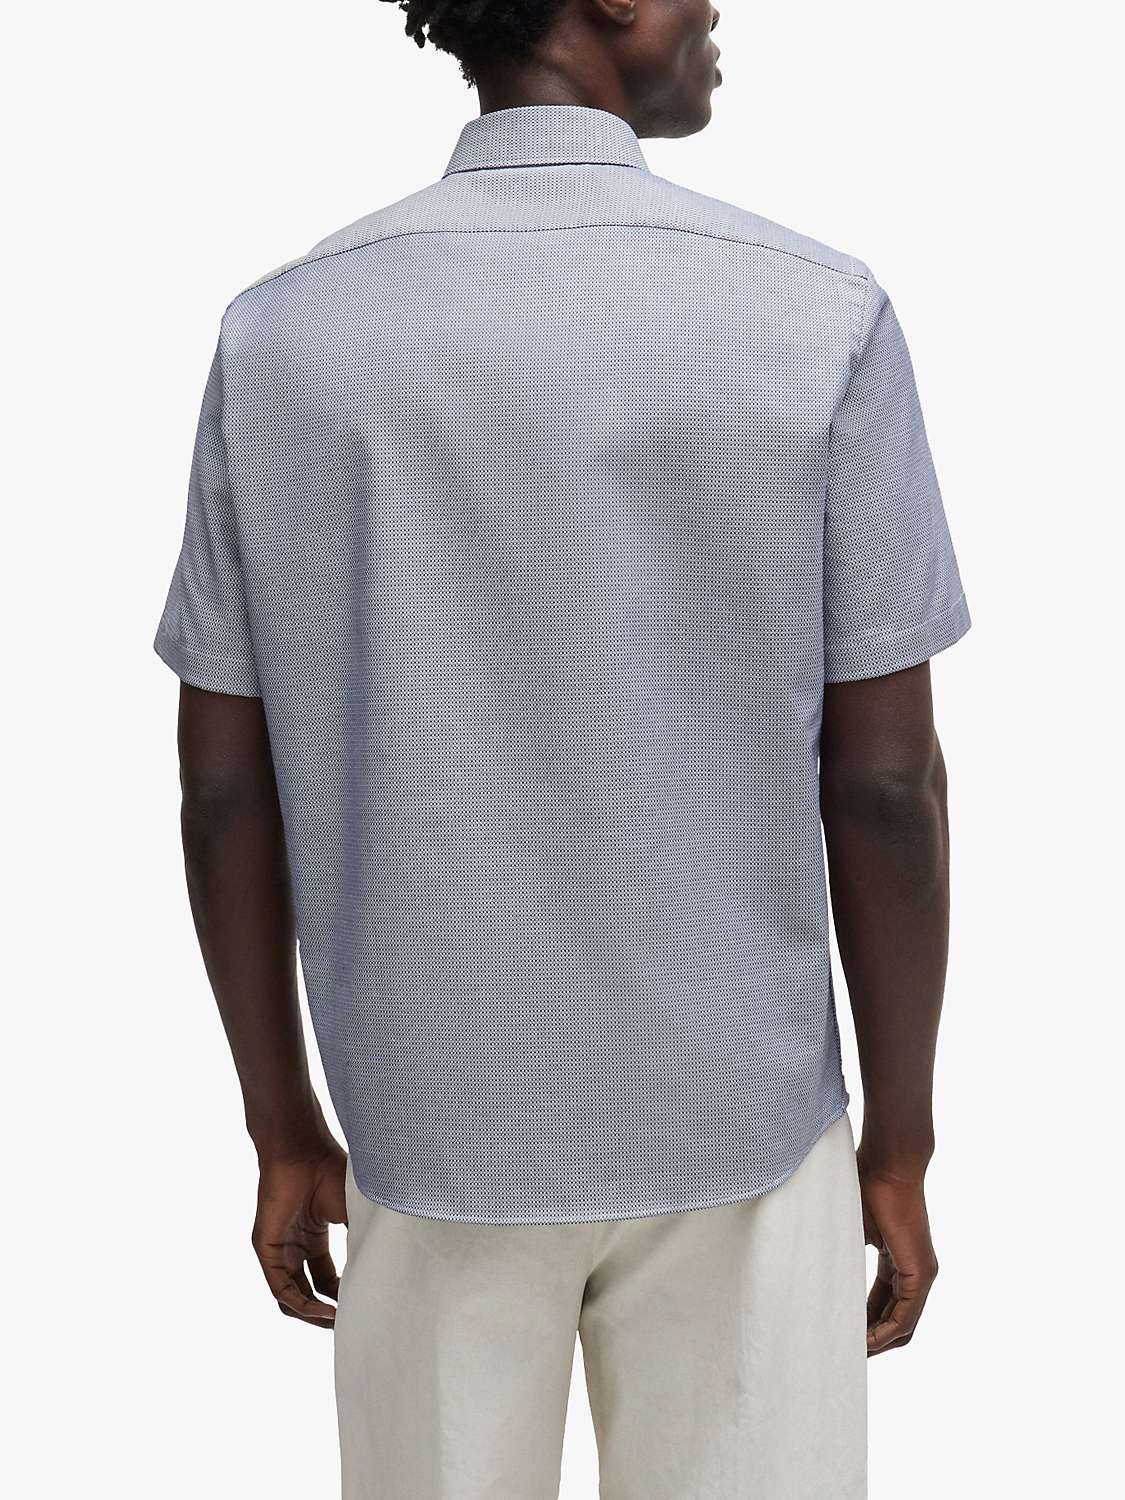 Buy BOSS Liam Regular Fit Shirt, Navy Online at johnlewis.com